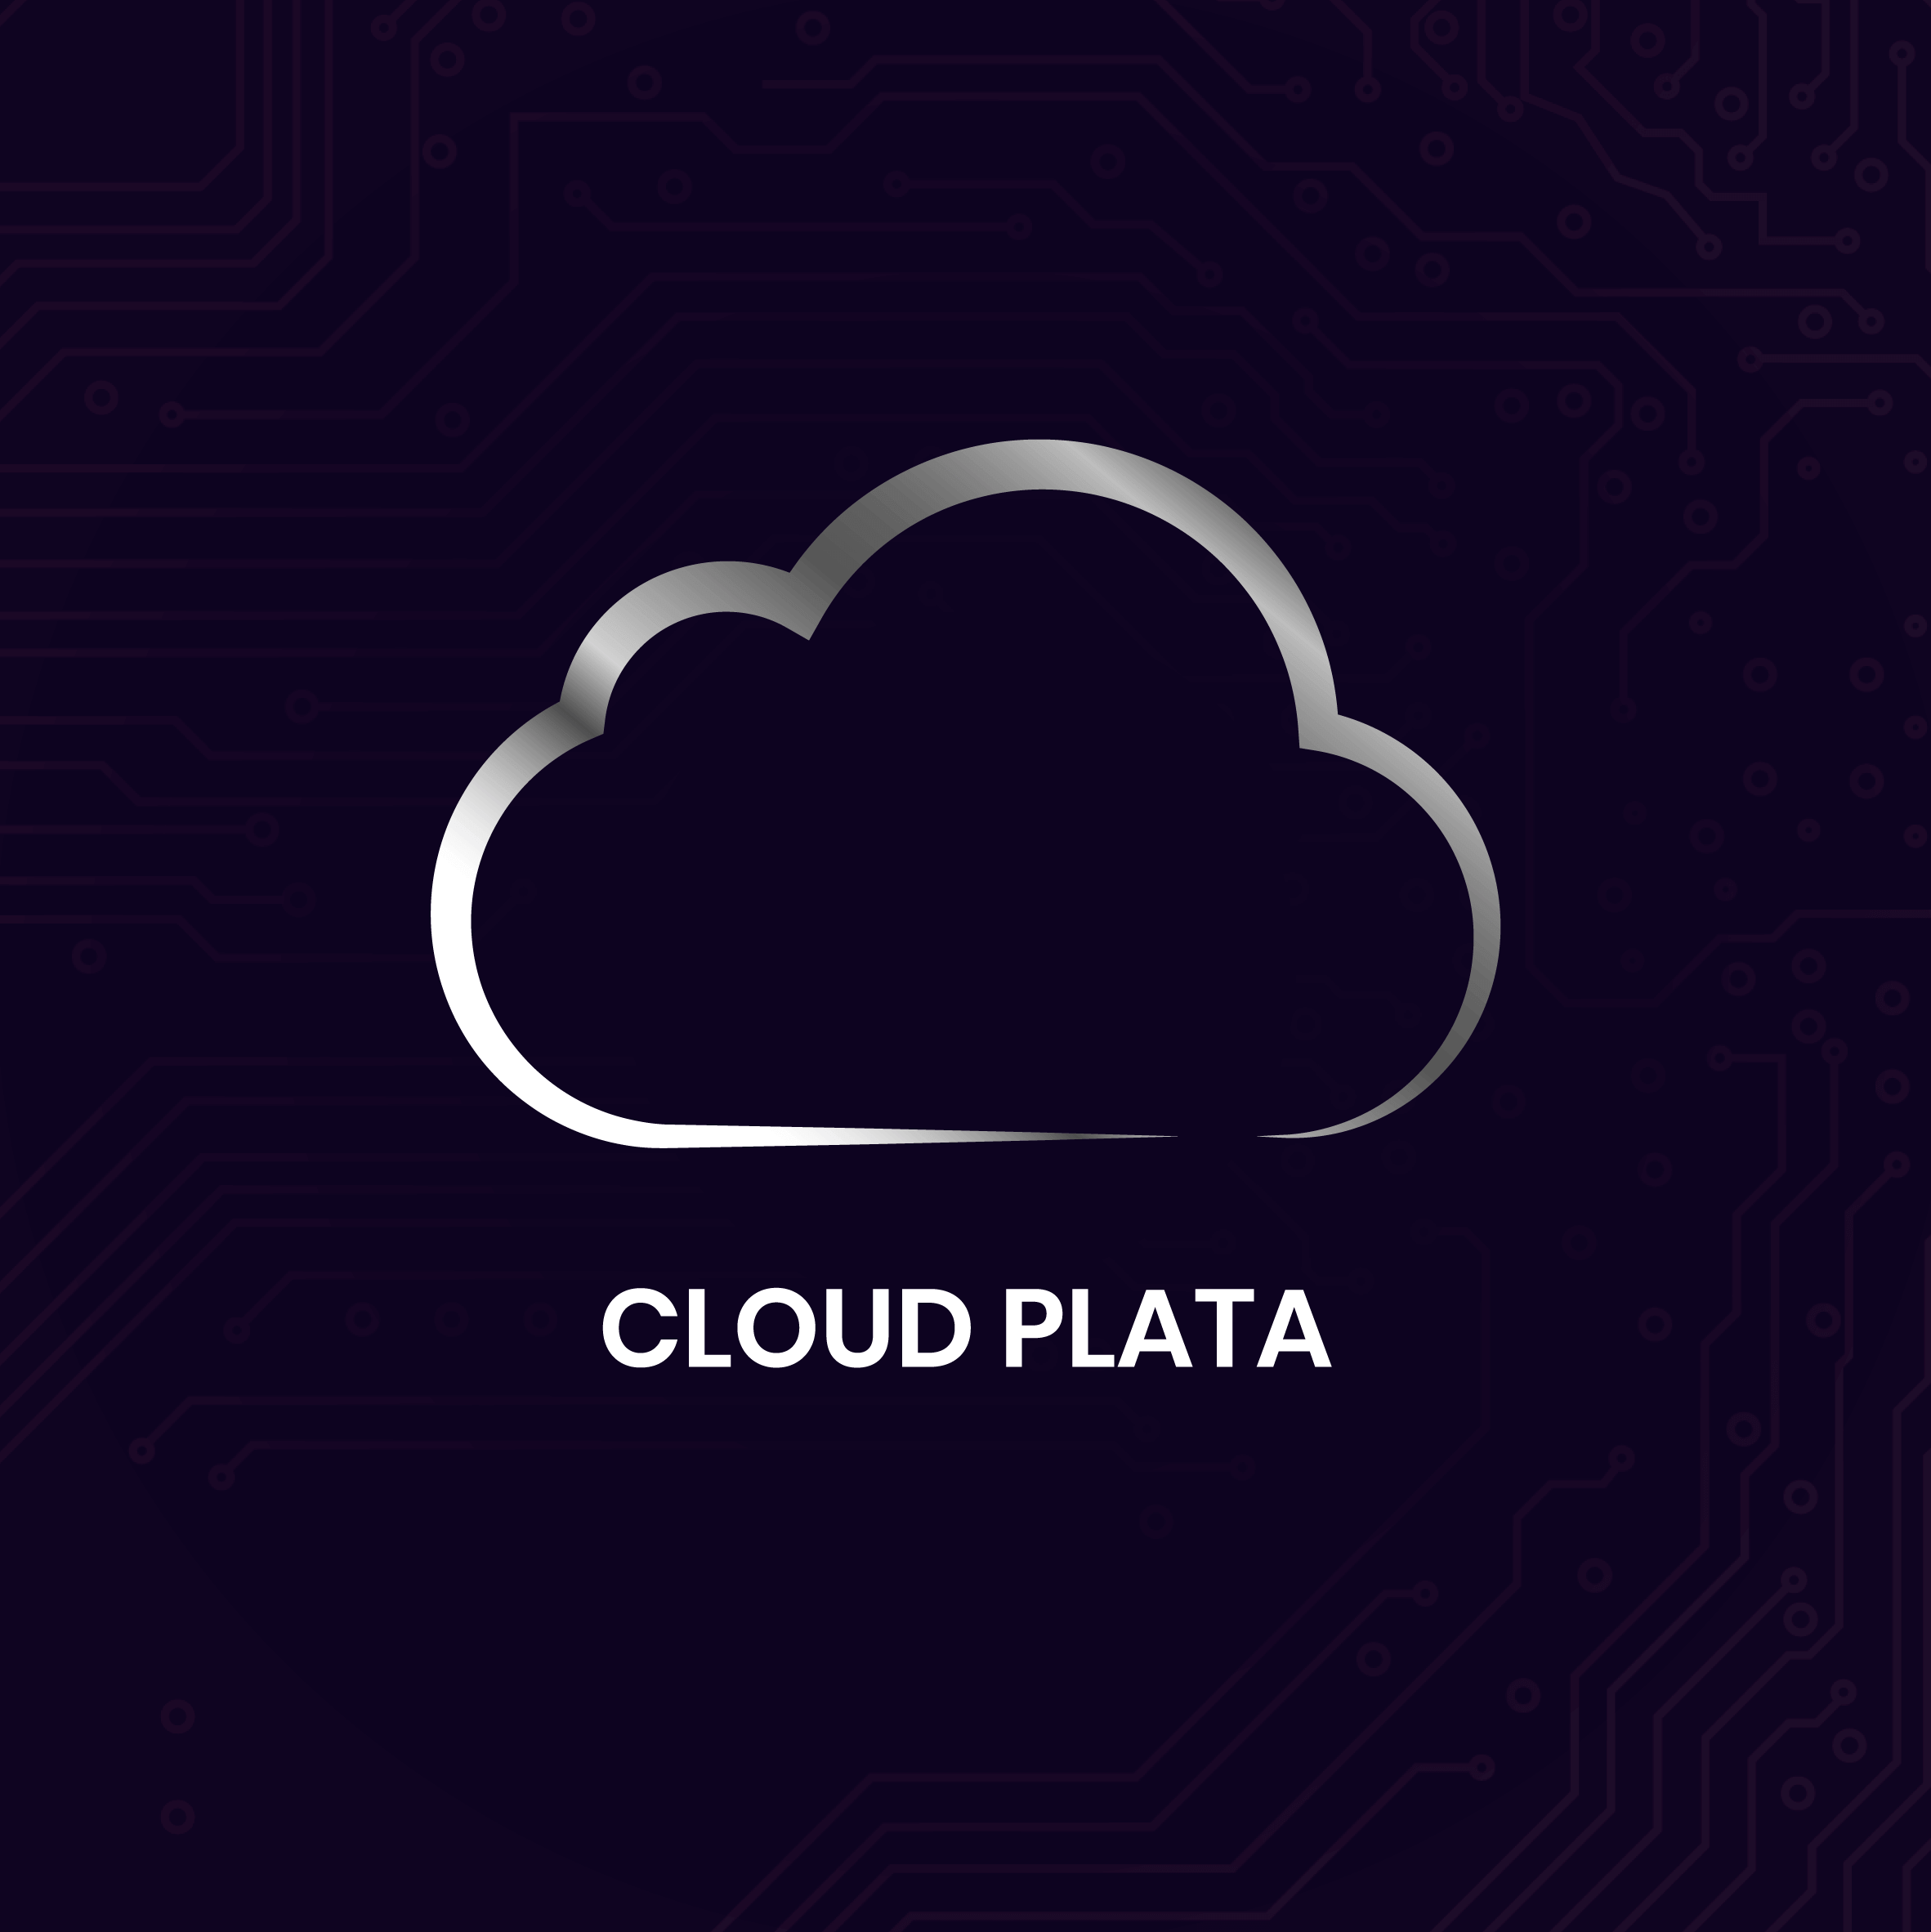 Cloud Plata - Synapse | Smart technologies